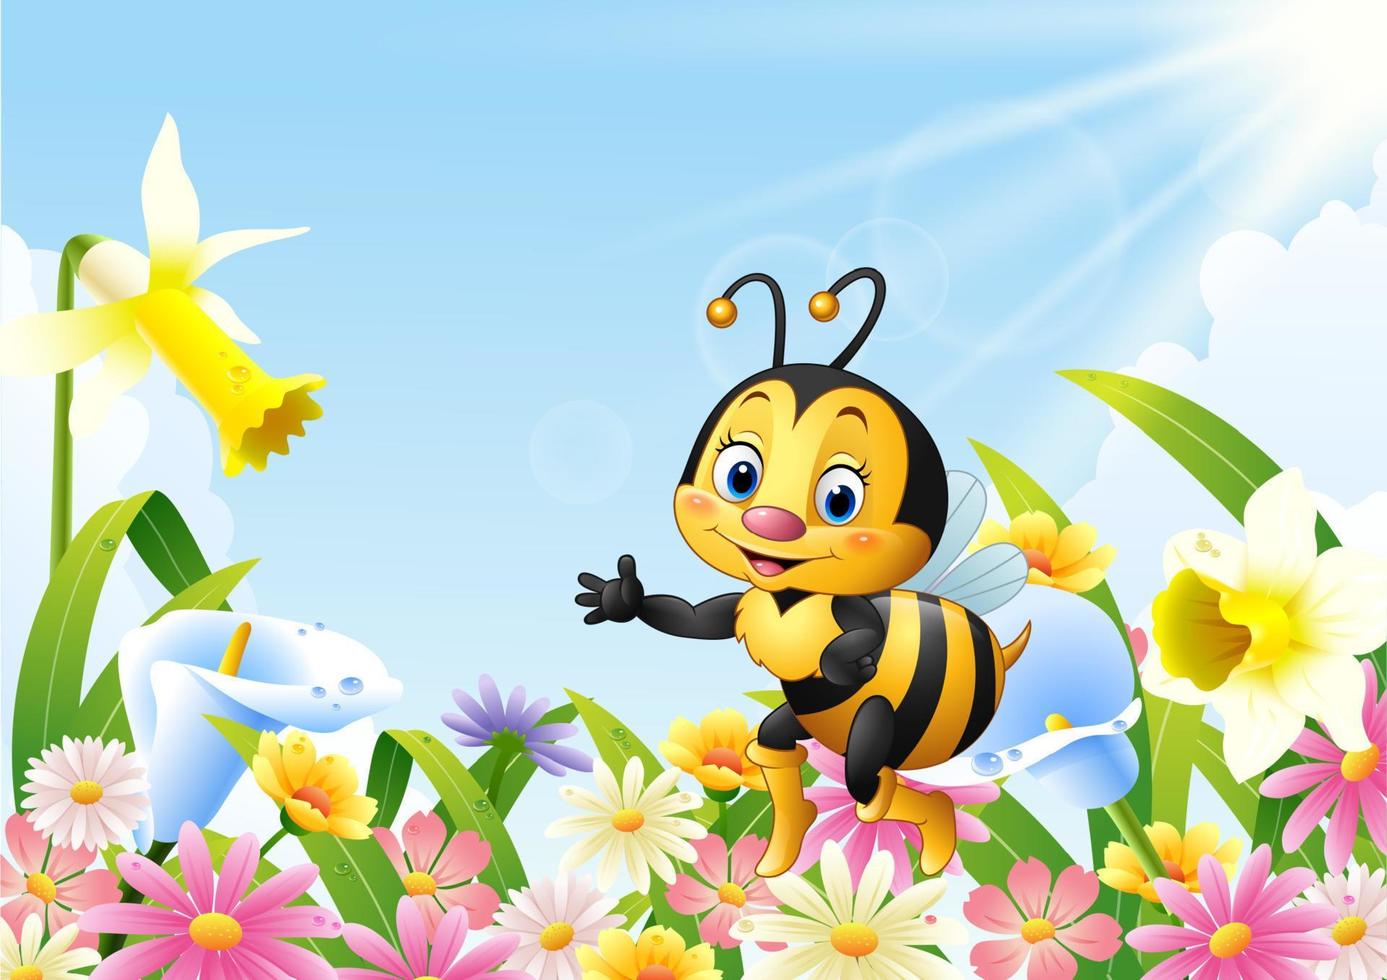 Cartoon bee sitting on flower and waving hand vector